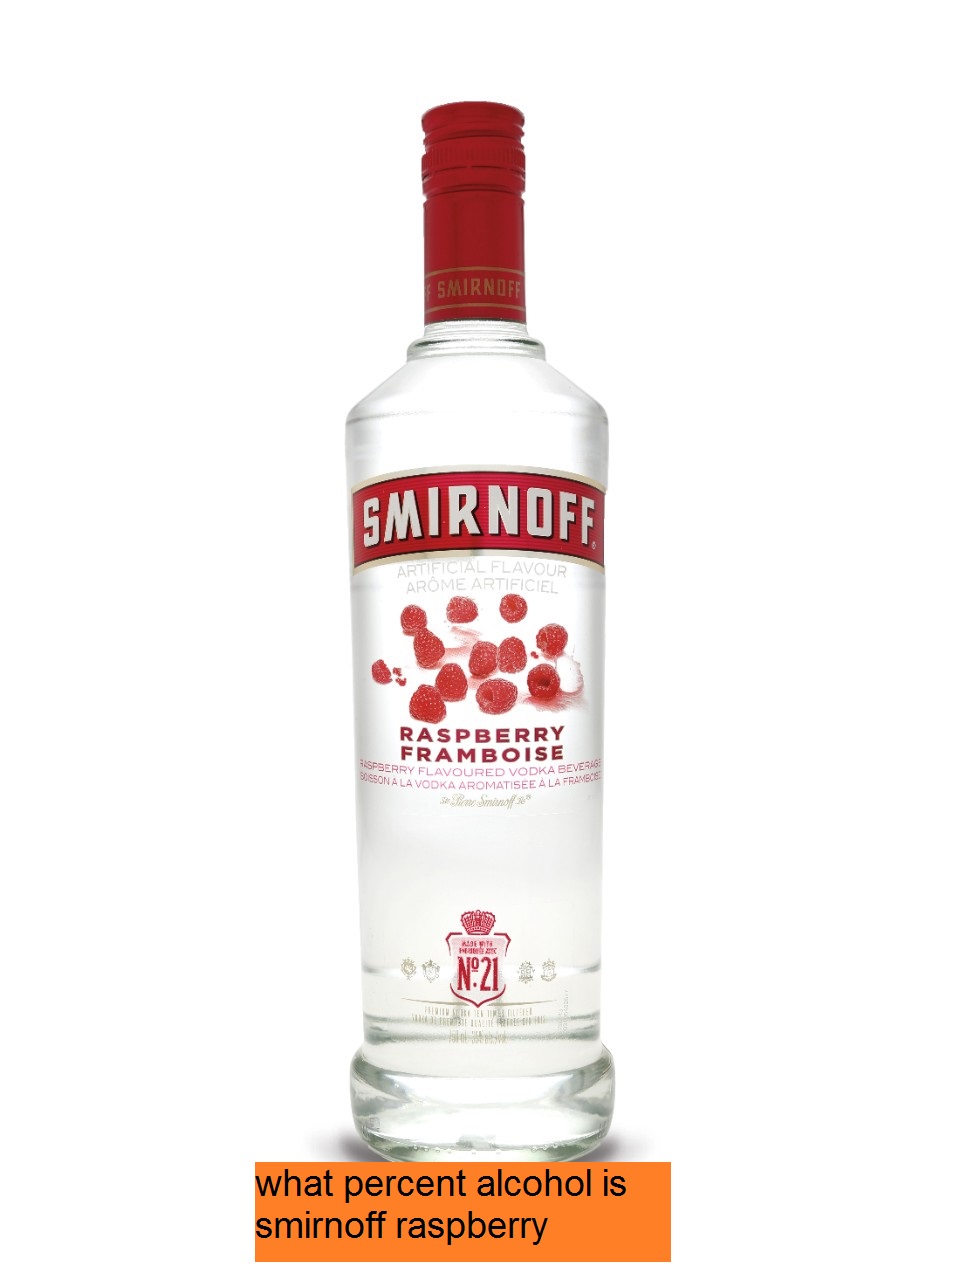 what percent alcohol is smirnoff raspberry